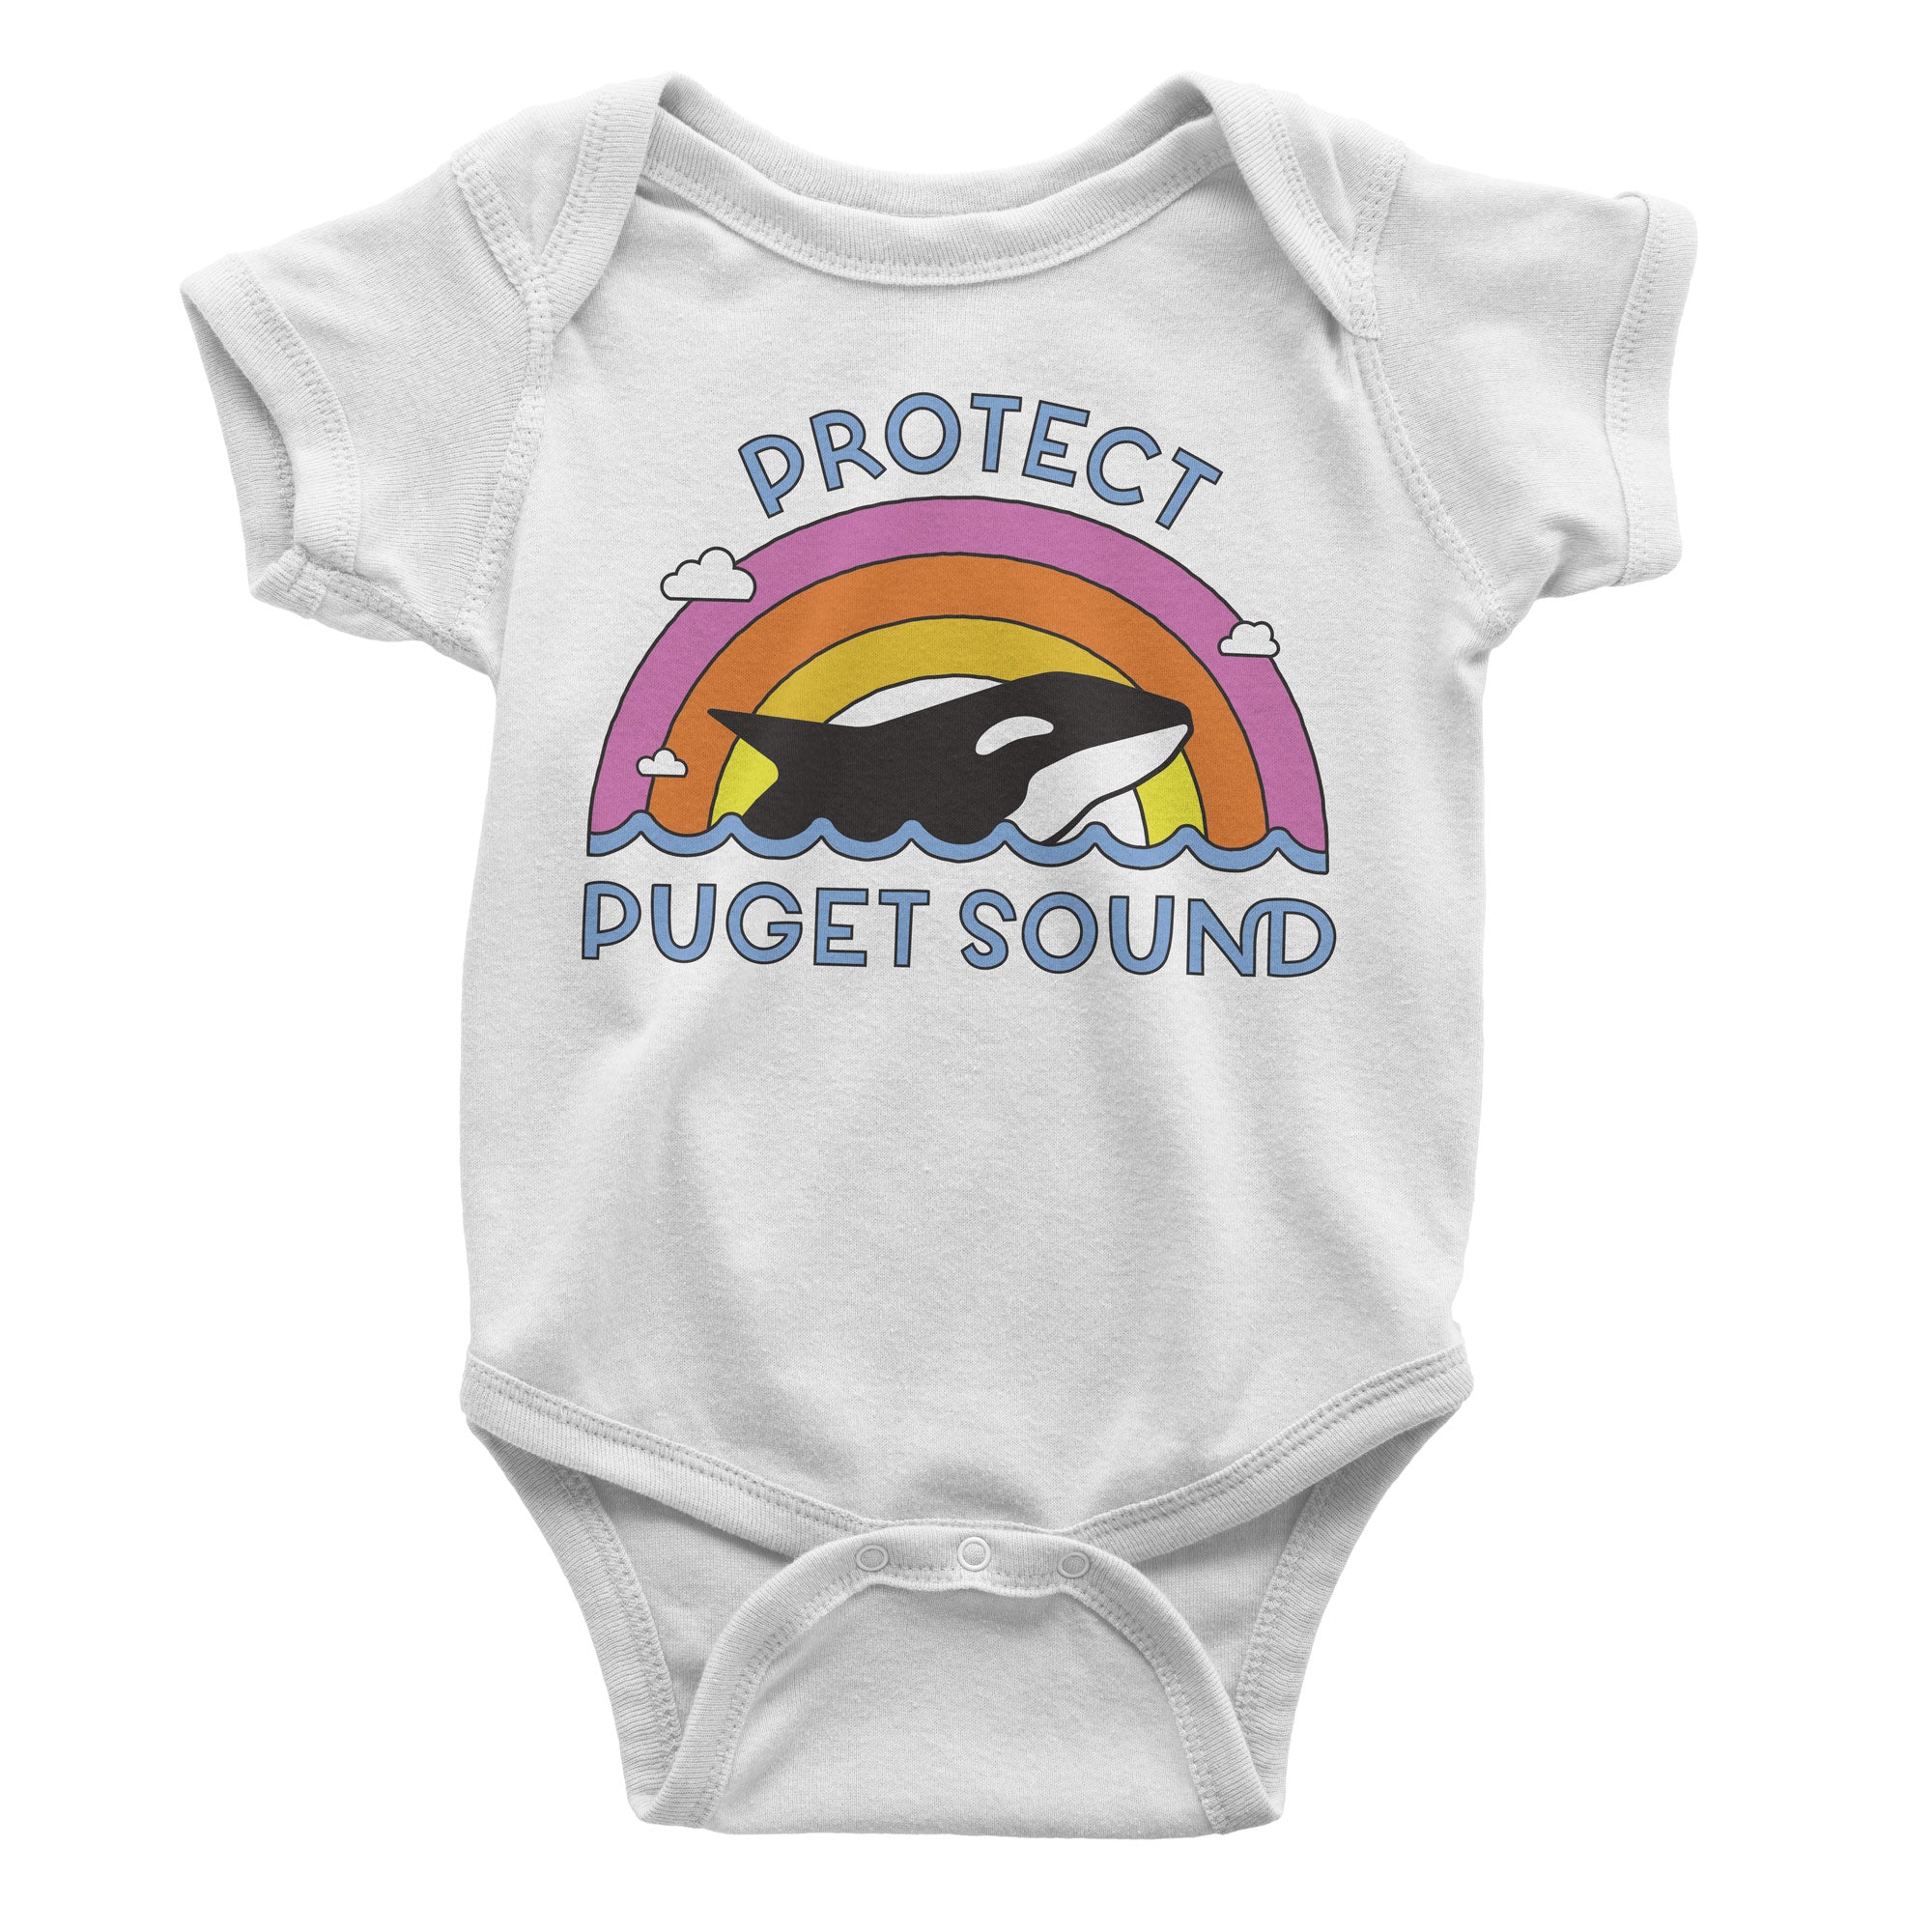 Protect Puget Sound Onesie - Viaduct